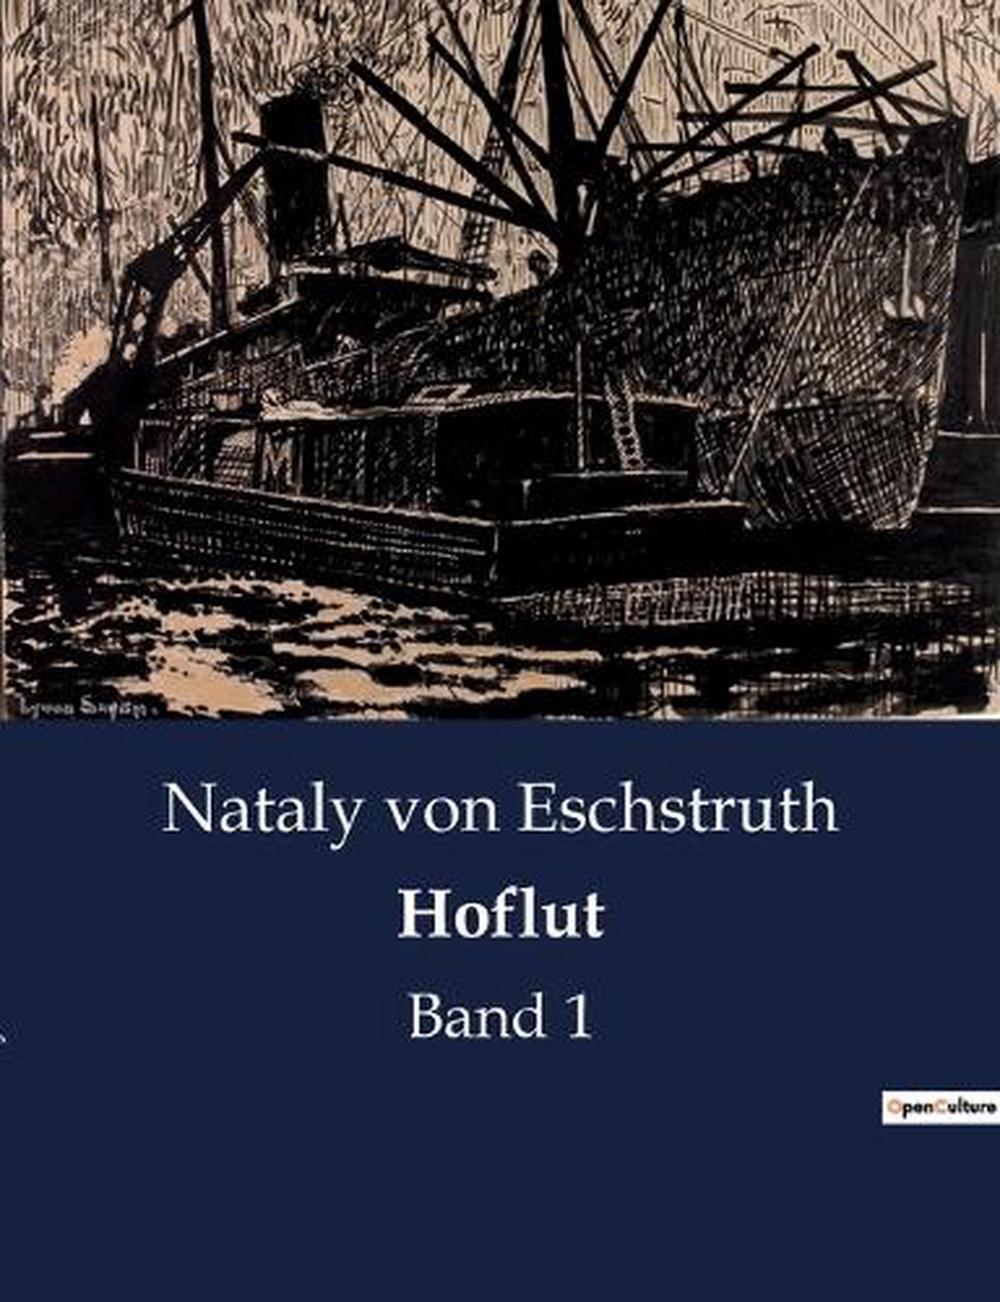 Libro de bolsillo Hoflut: Volumen 1 de Nataly Von Eschstruth - Nataly Von Eschstruth